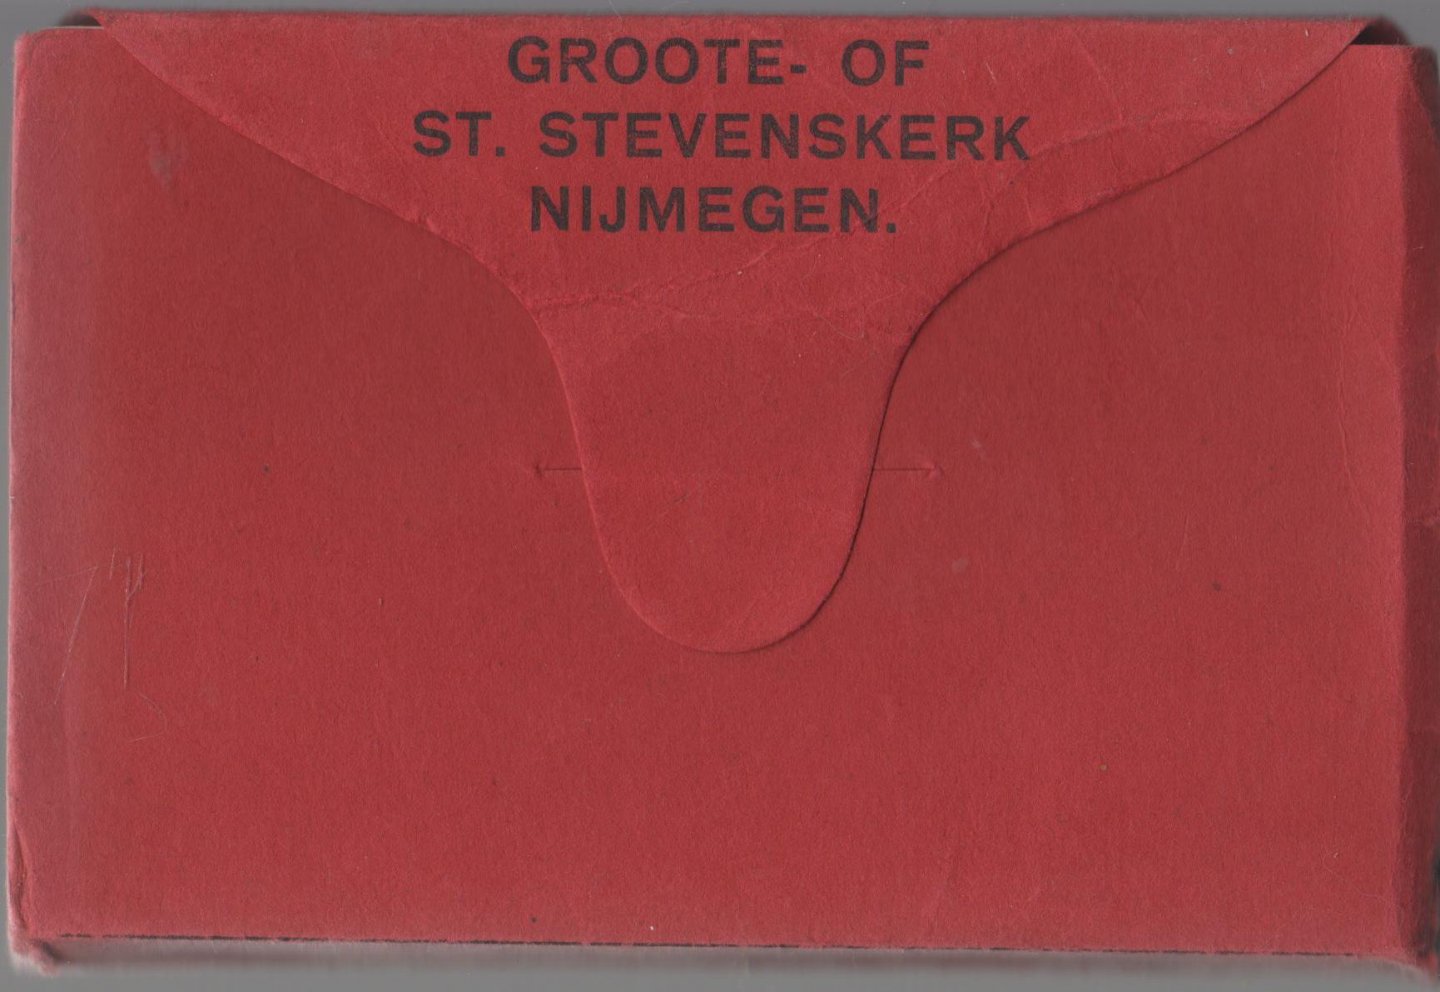  - Groote- of St. Stevenskerk Nijmegen